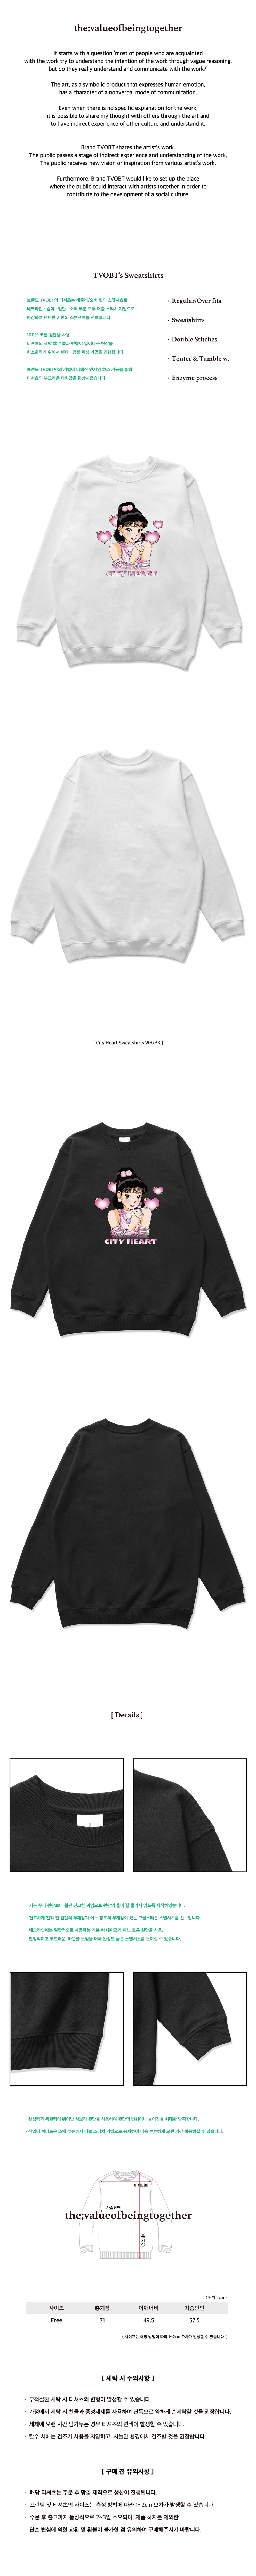 City Heart Sweatshirts WH/BK